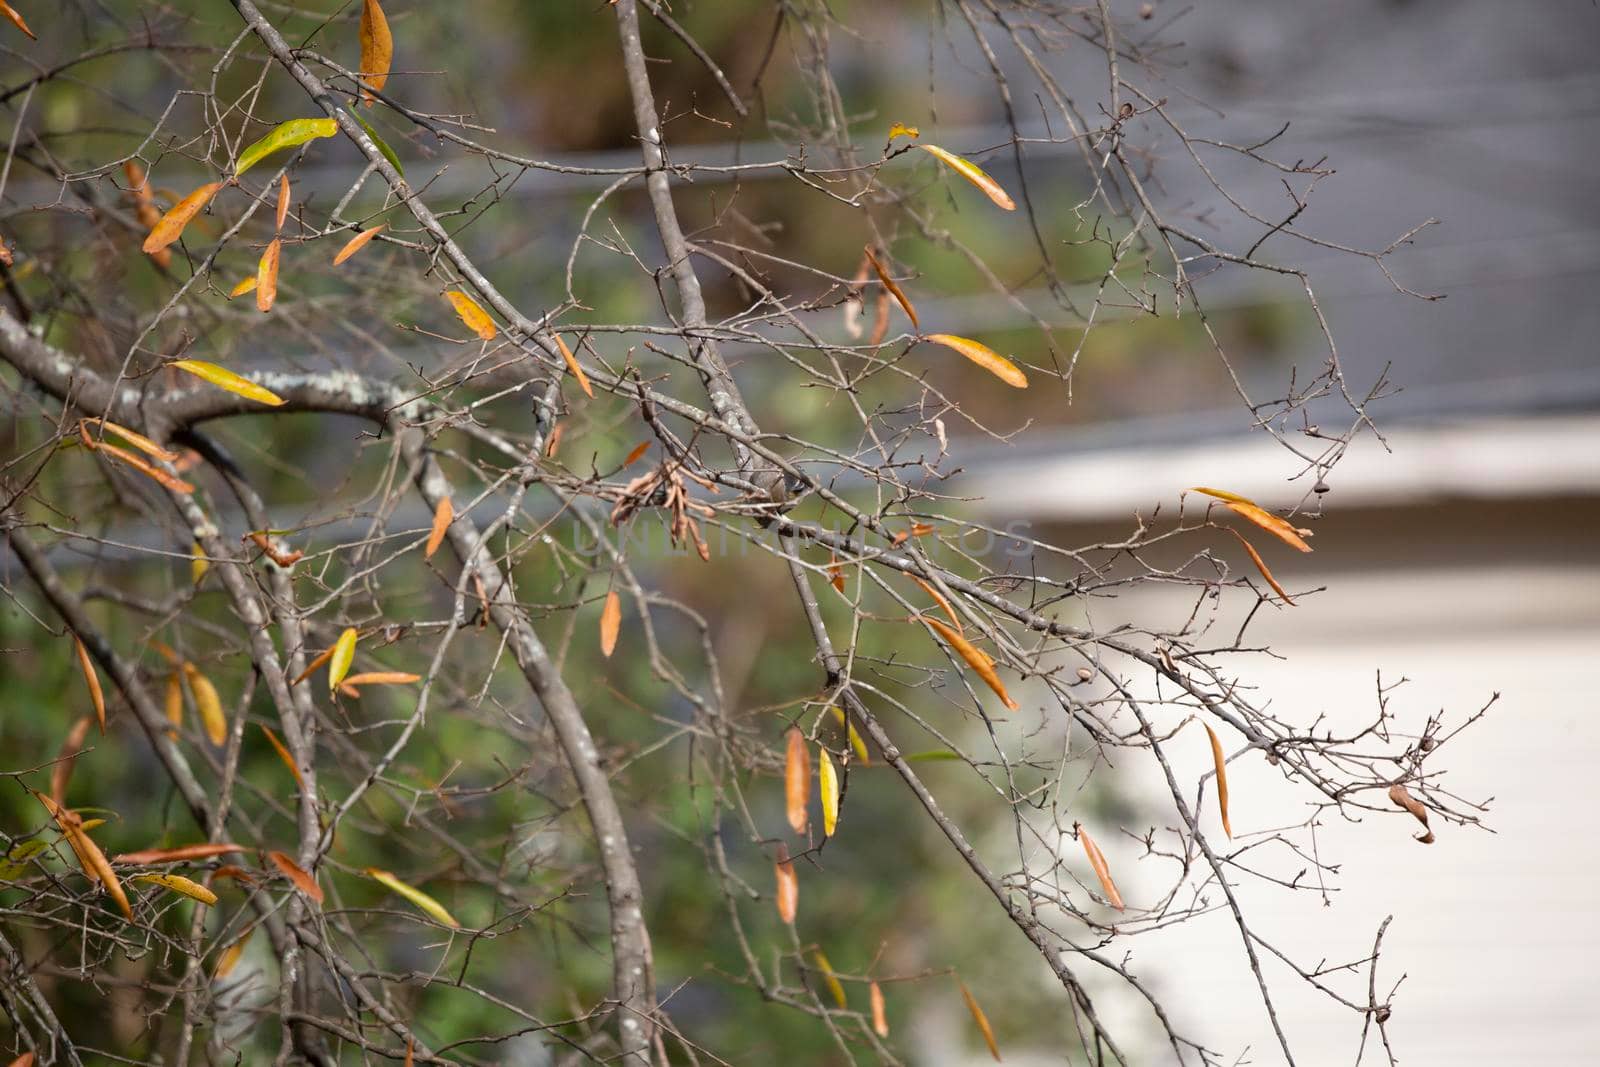 Female Yellow-Rumped Warbler by tornado98